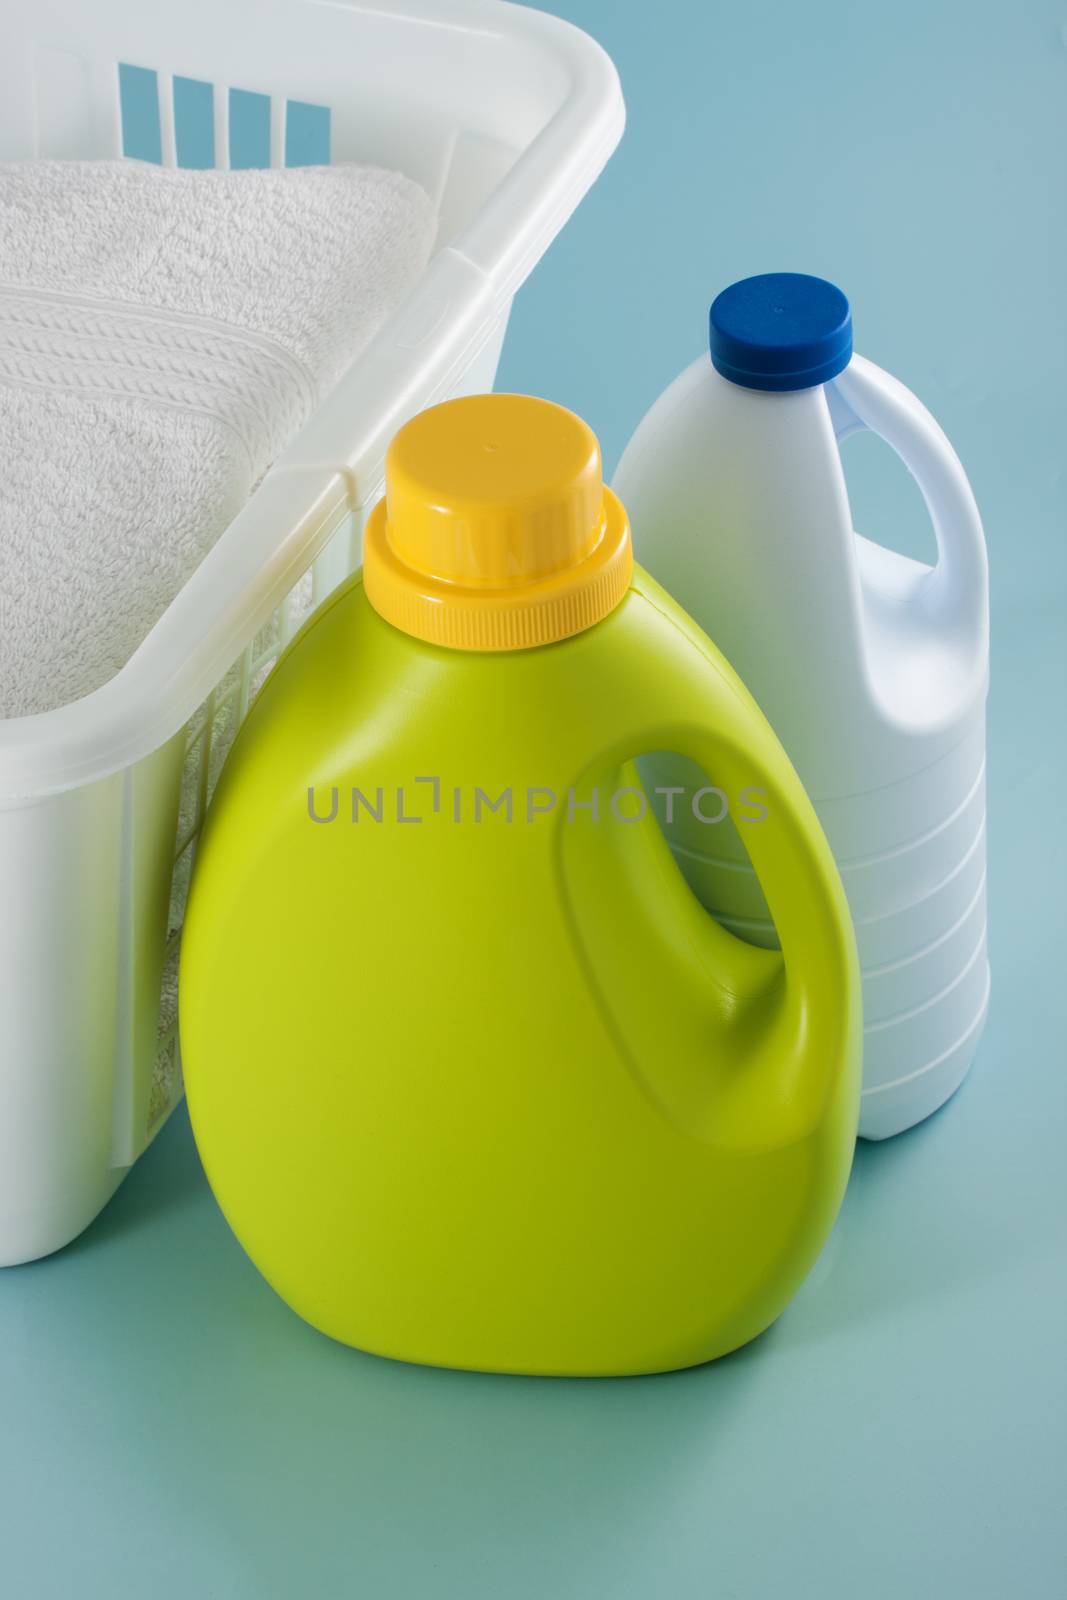 Laundry green detergent bottle and white bleach bottle